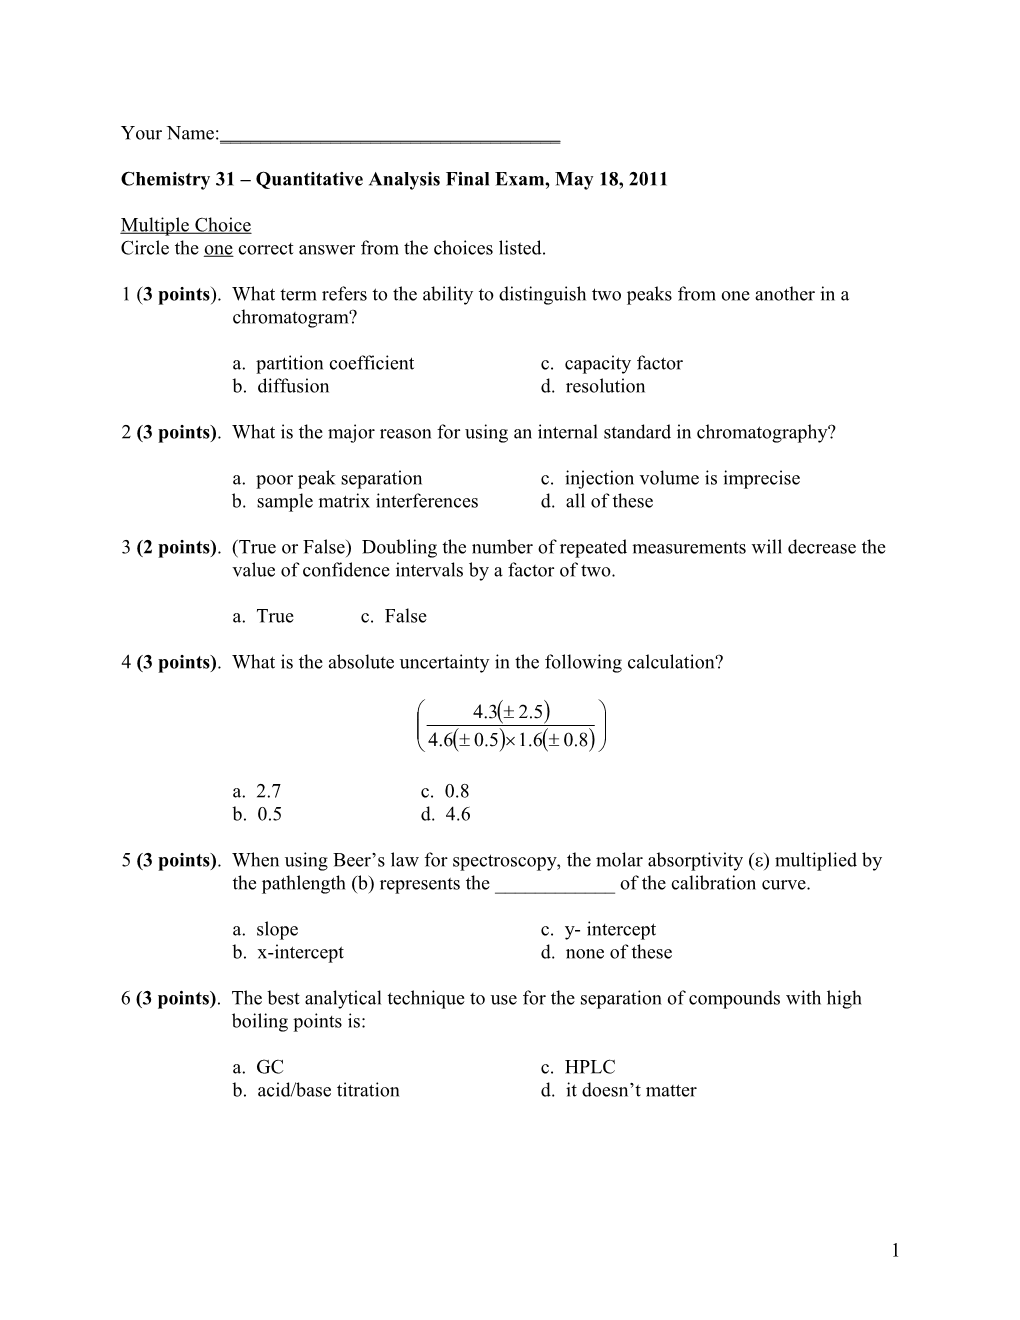 Chemistry 31 Quantitative Analysis Final Exam, May 18, 2011